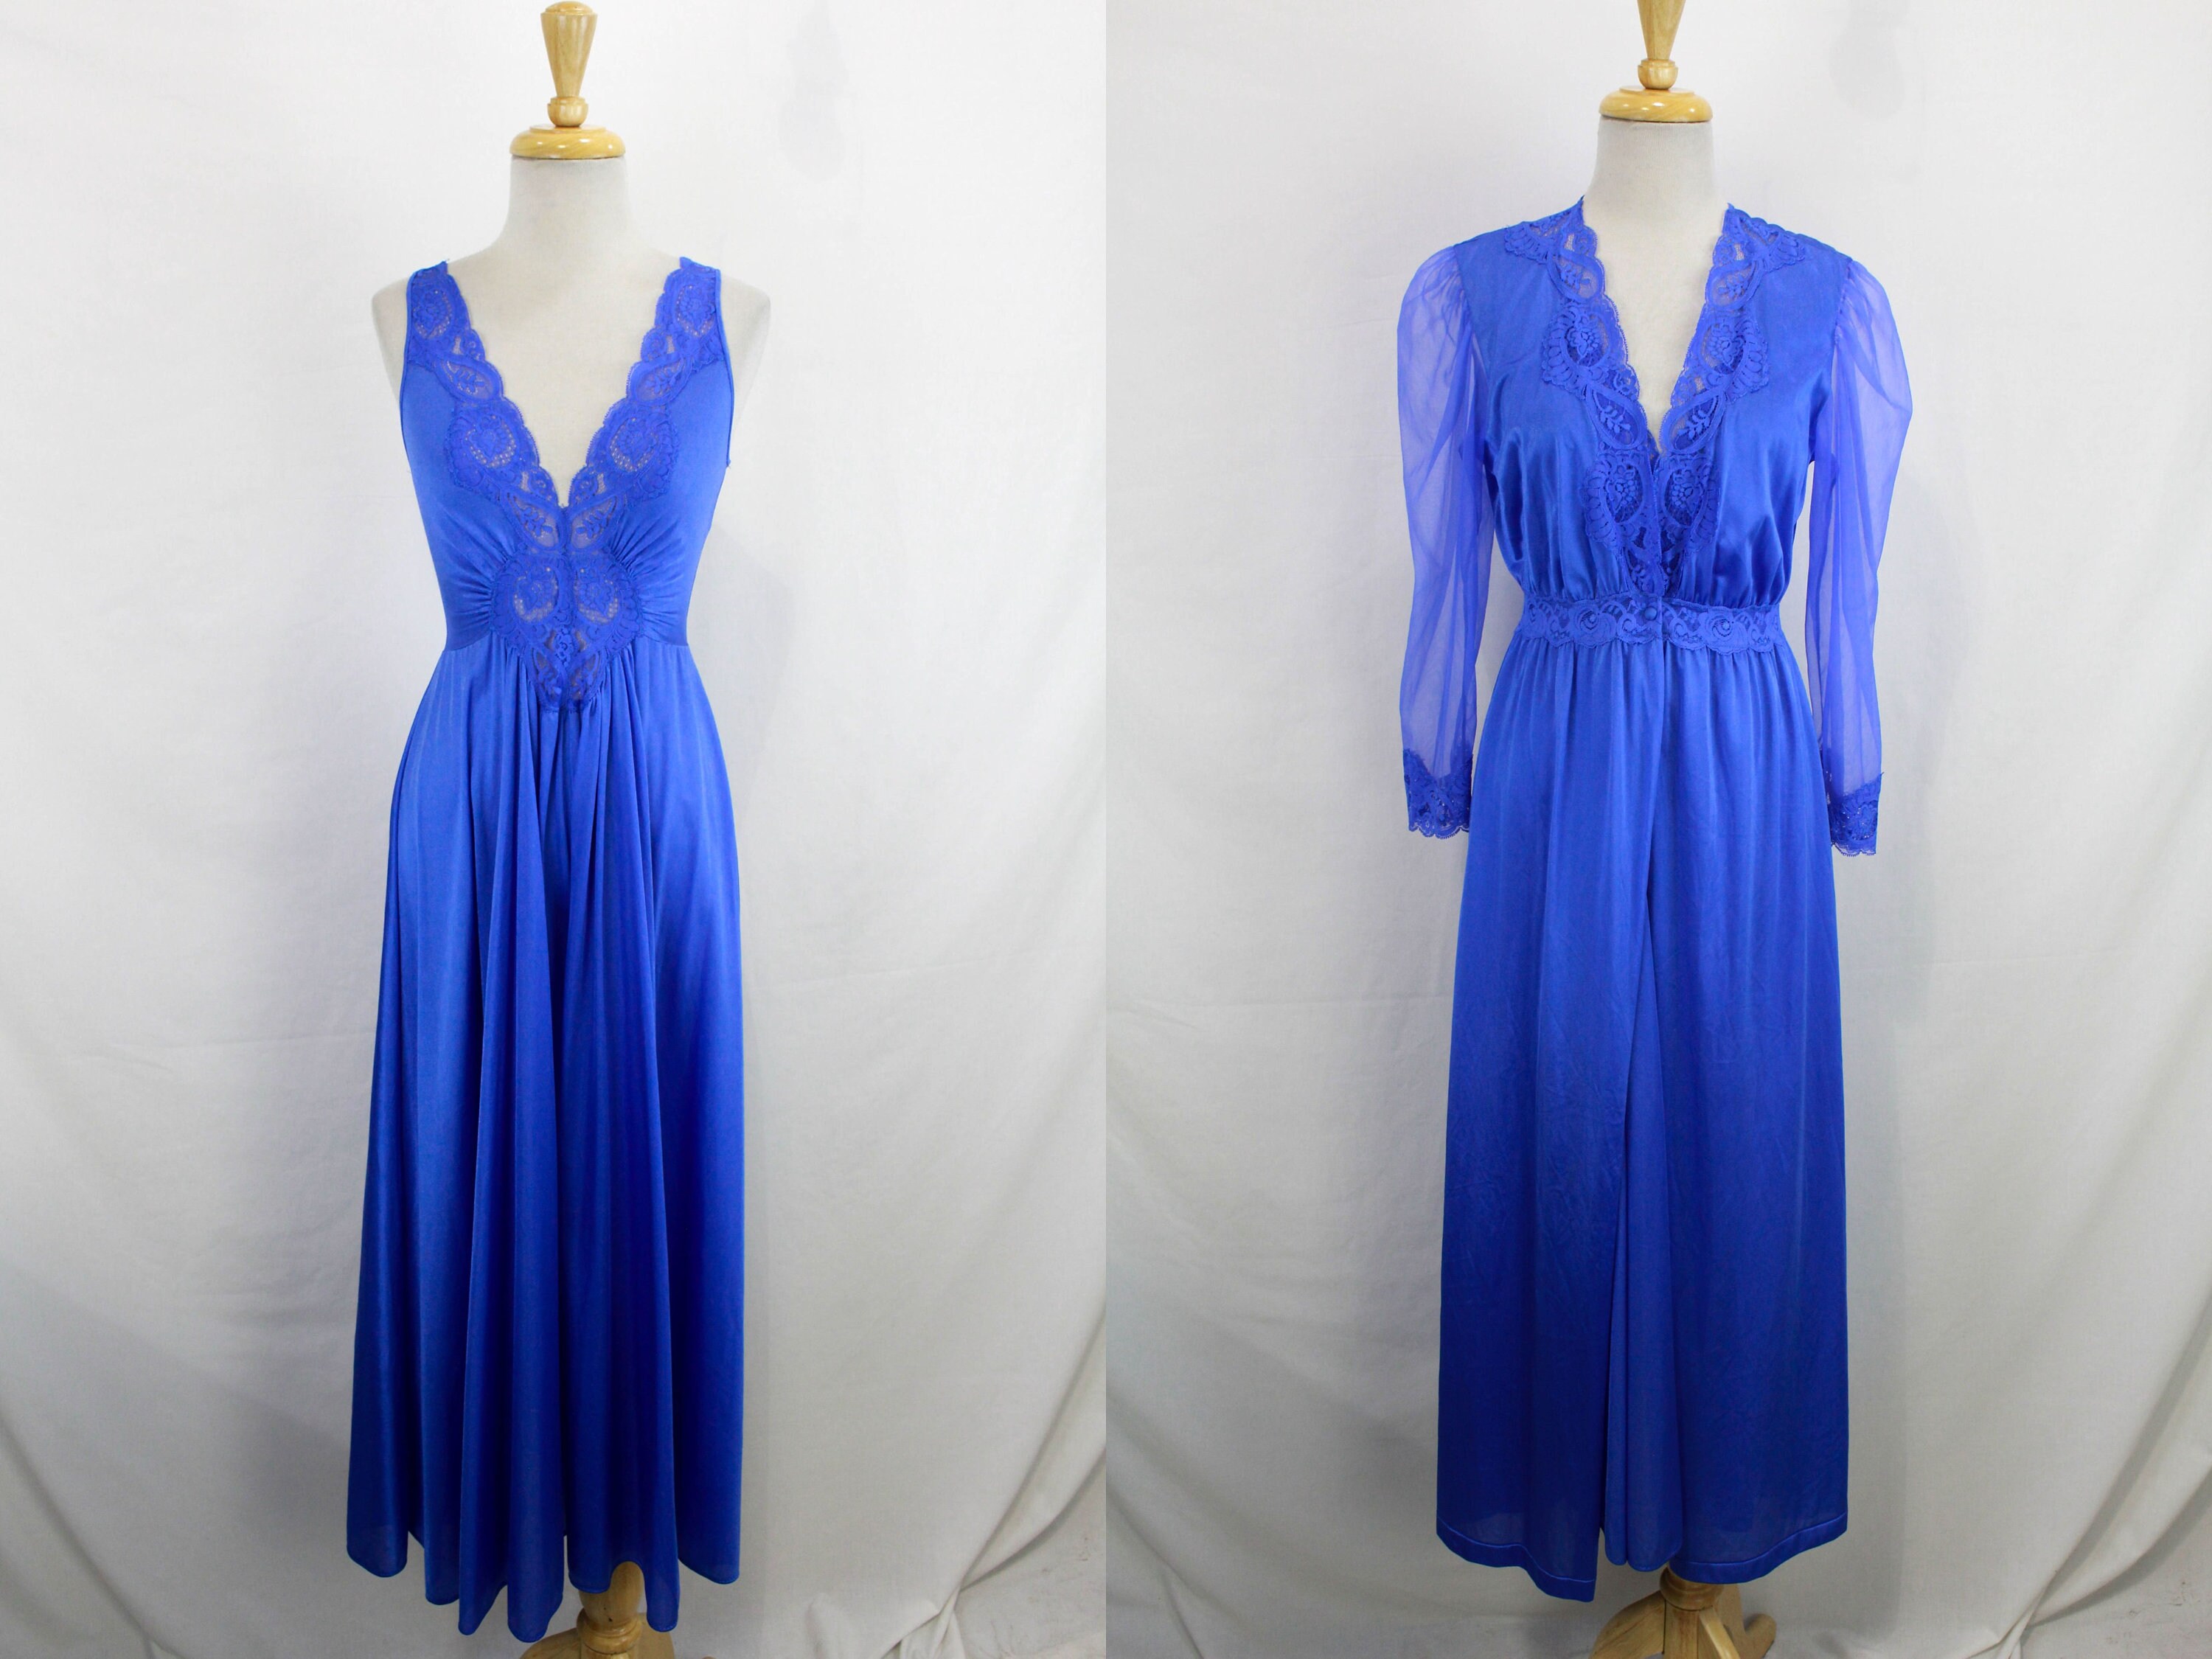 Kleding Dameskleding Pyjamas & Badjassen Sets Grote Jaren 1970 Blue Peignoir Set Vintage jaren 70 Negligee Nachthemd Sheer Maxi Jurk & Robe As Is 